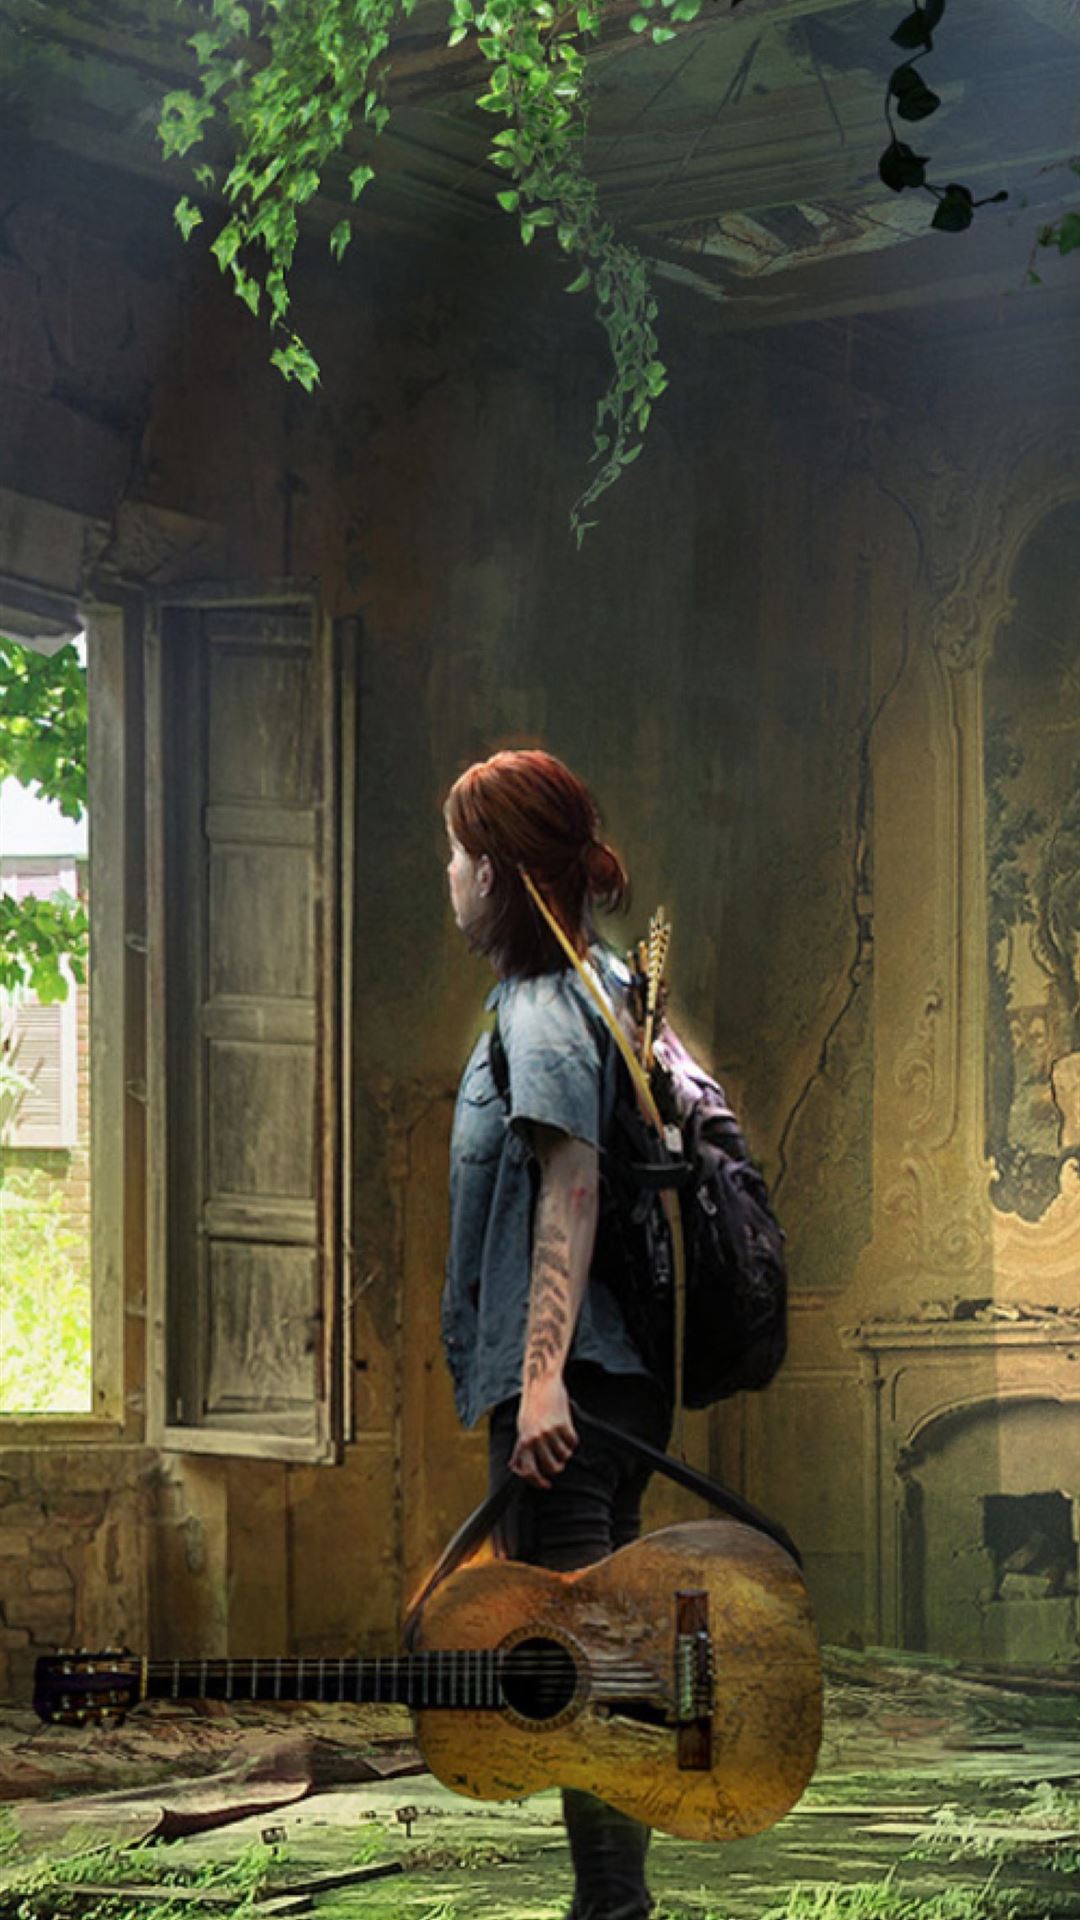 Ellie The Last Of Us 4k Wallpapers - Wallpaper Cave